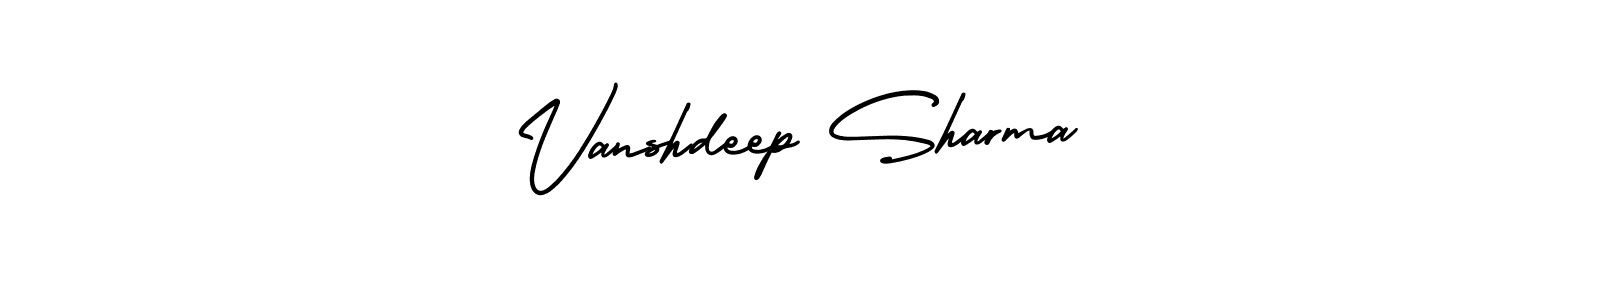 How to Draw Vanshdeep Sharma signature style? AmerikaSignatureDemo-Regular is a latest design signature styles for name Vanshdeep Sharma. Vanshdeep Sharma signature style 3 images and pictures png